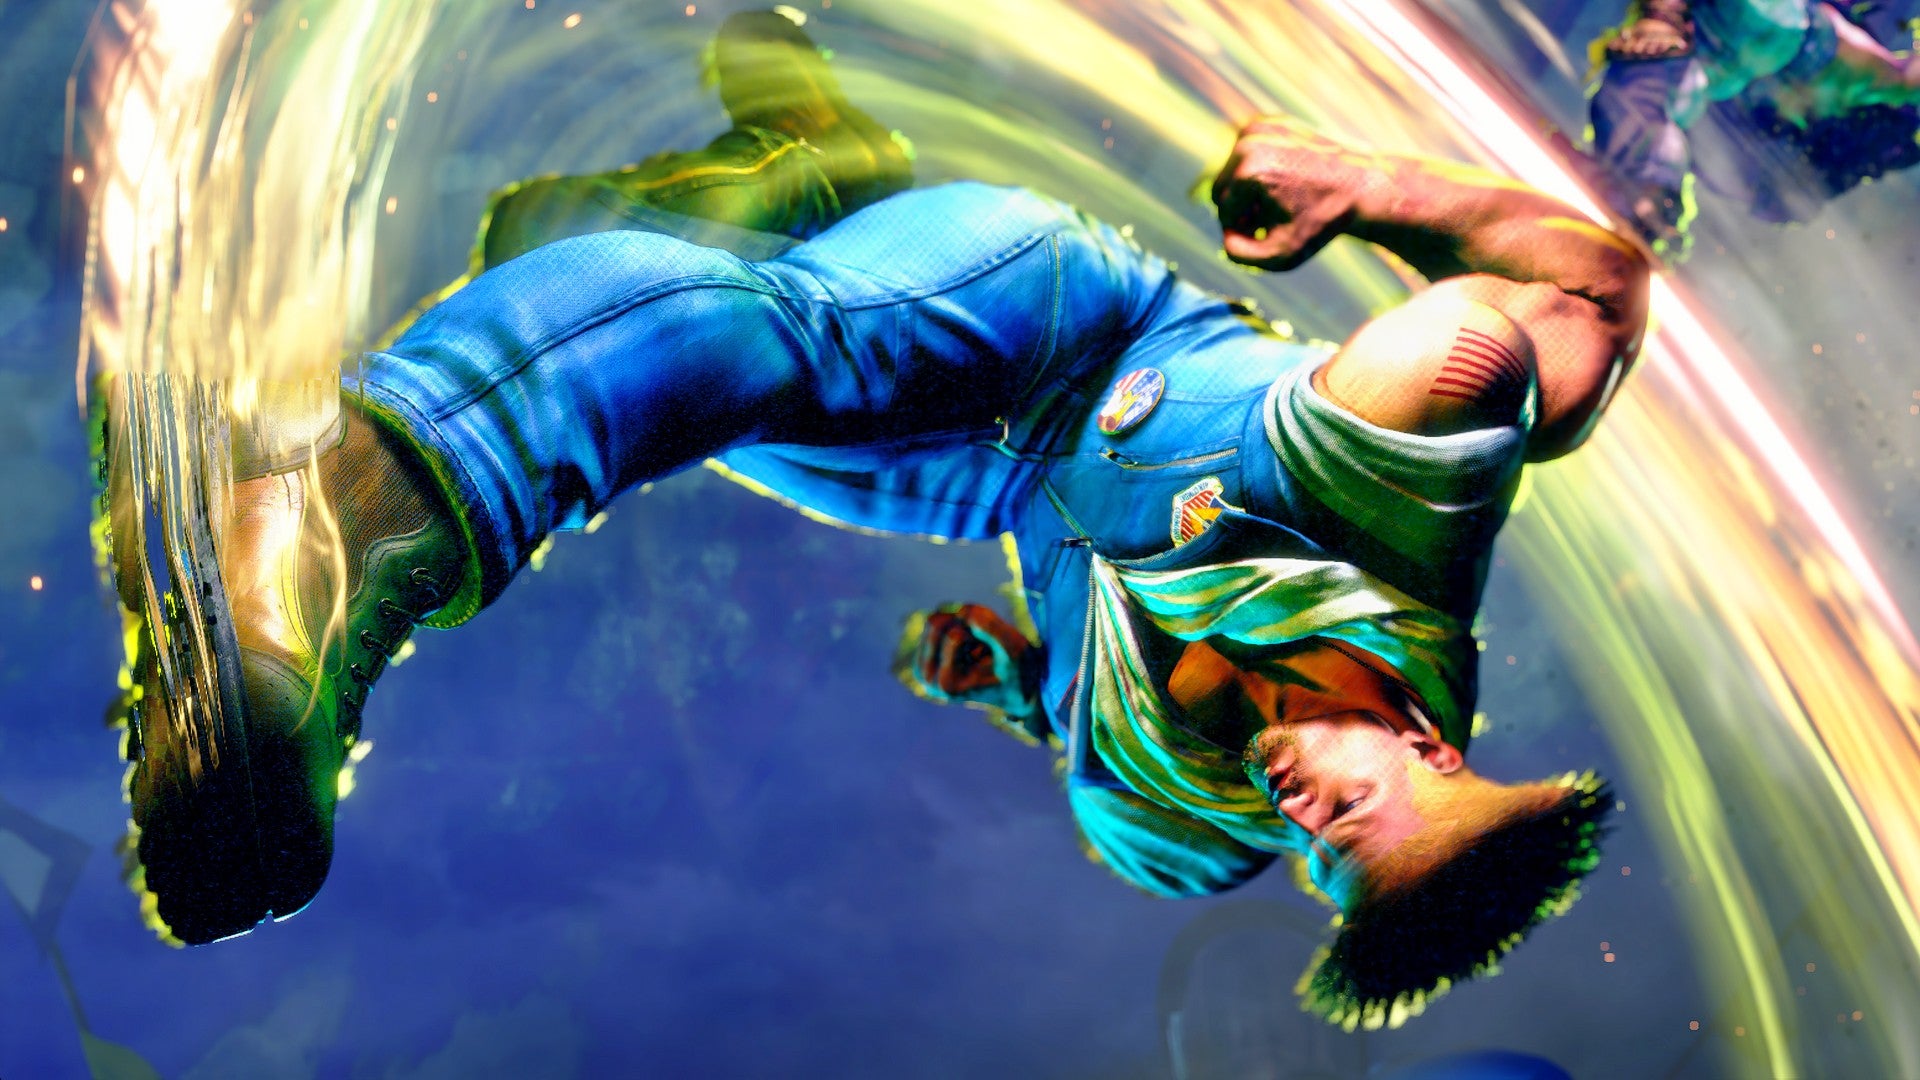 Bilder zu Street Fighter 6 hat wohl Cross-Play, aber Capcom hält sich noch bedeckt